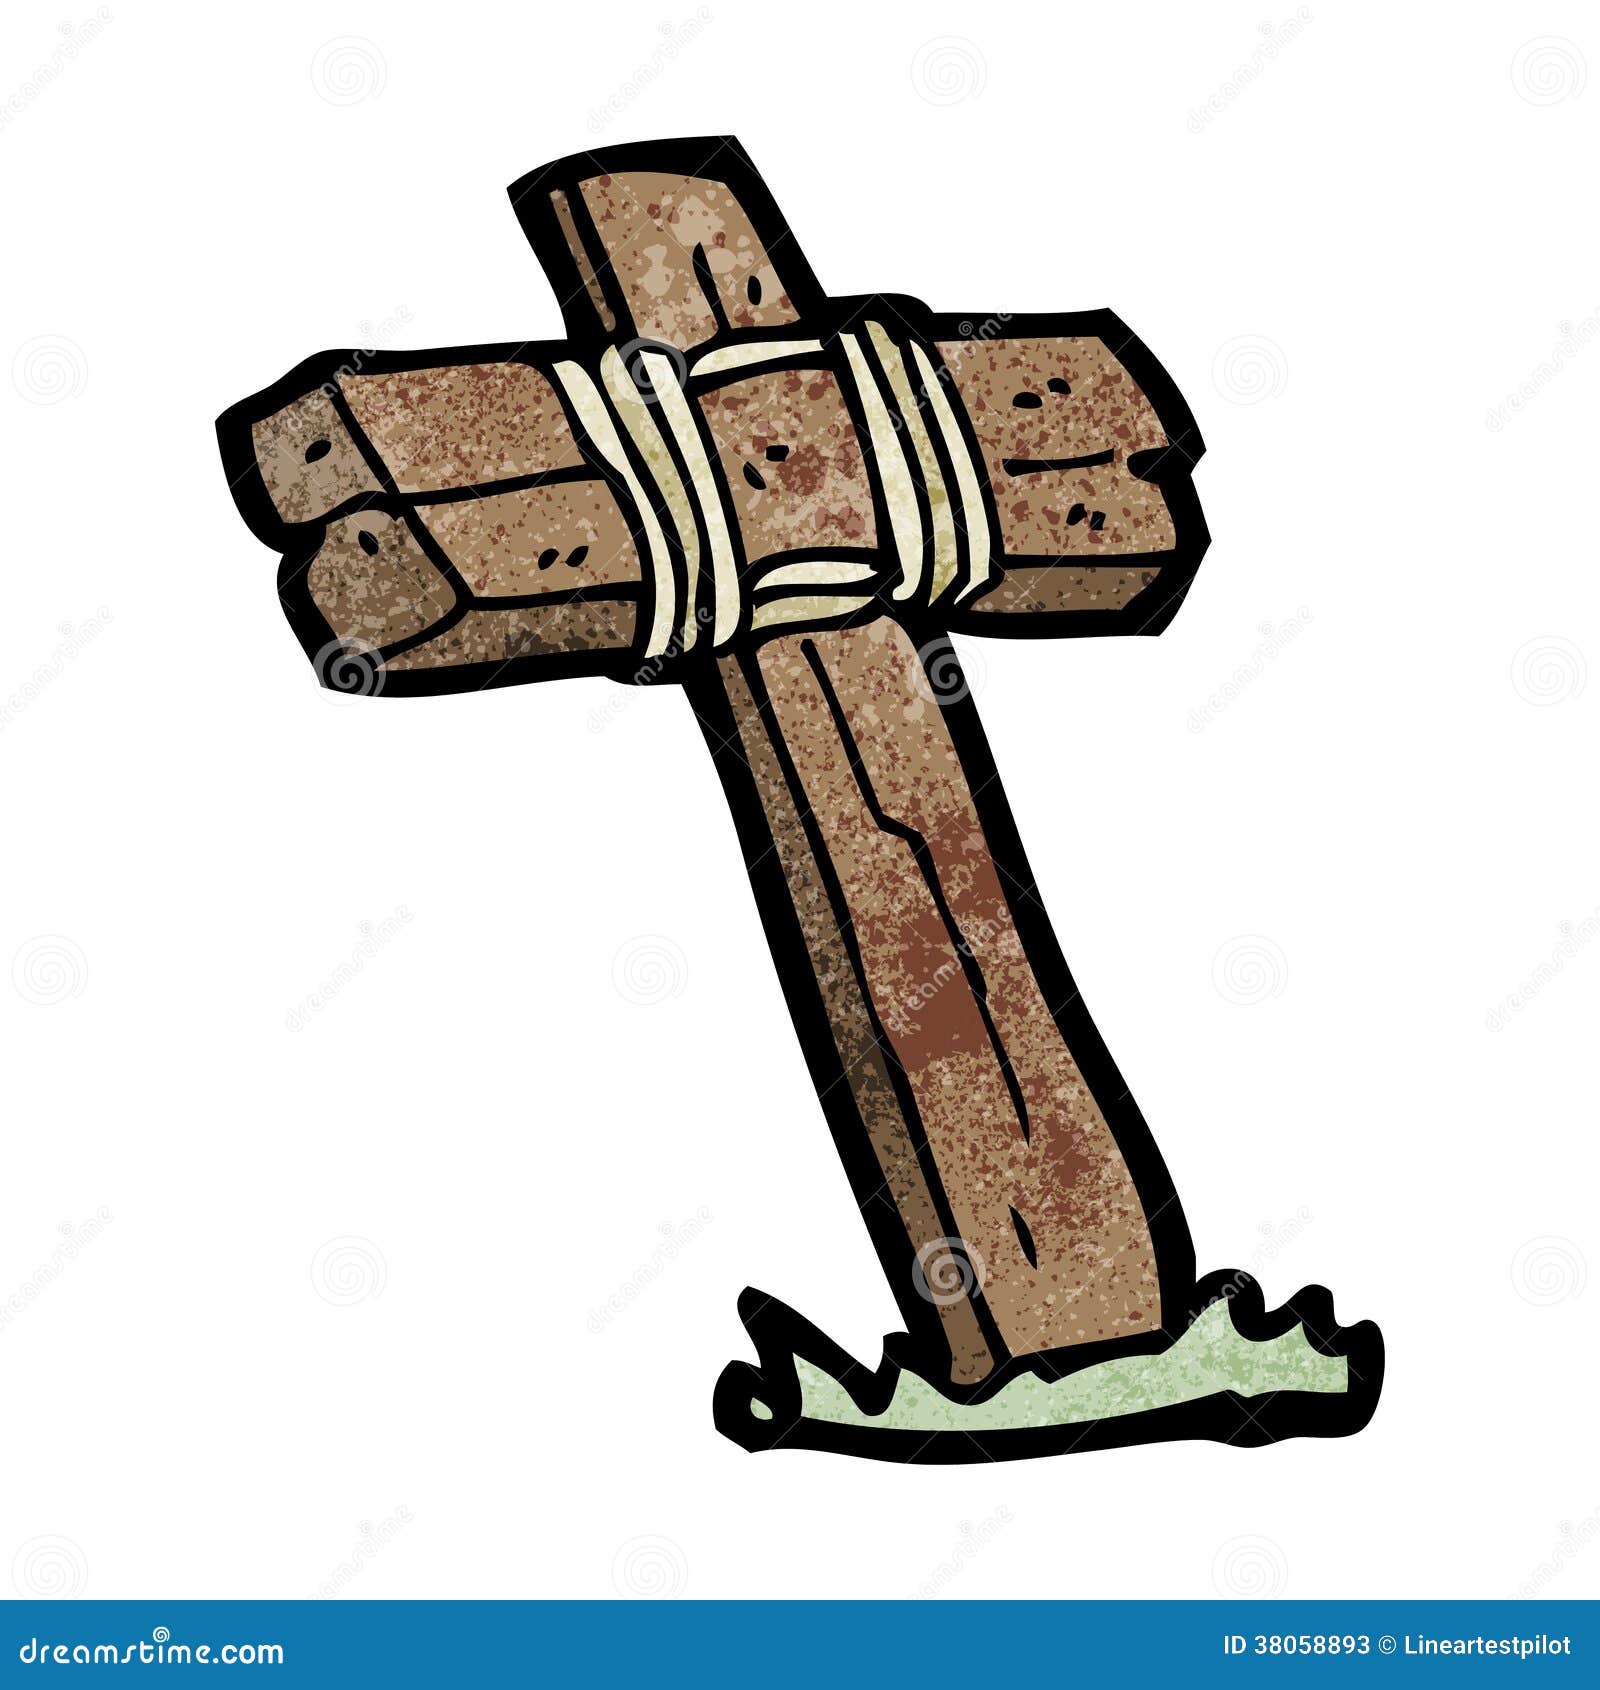 Wooden cross cartoon stock vector. Illustration of doodle - 38058893